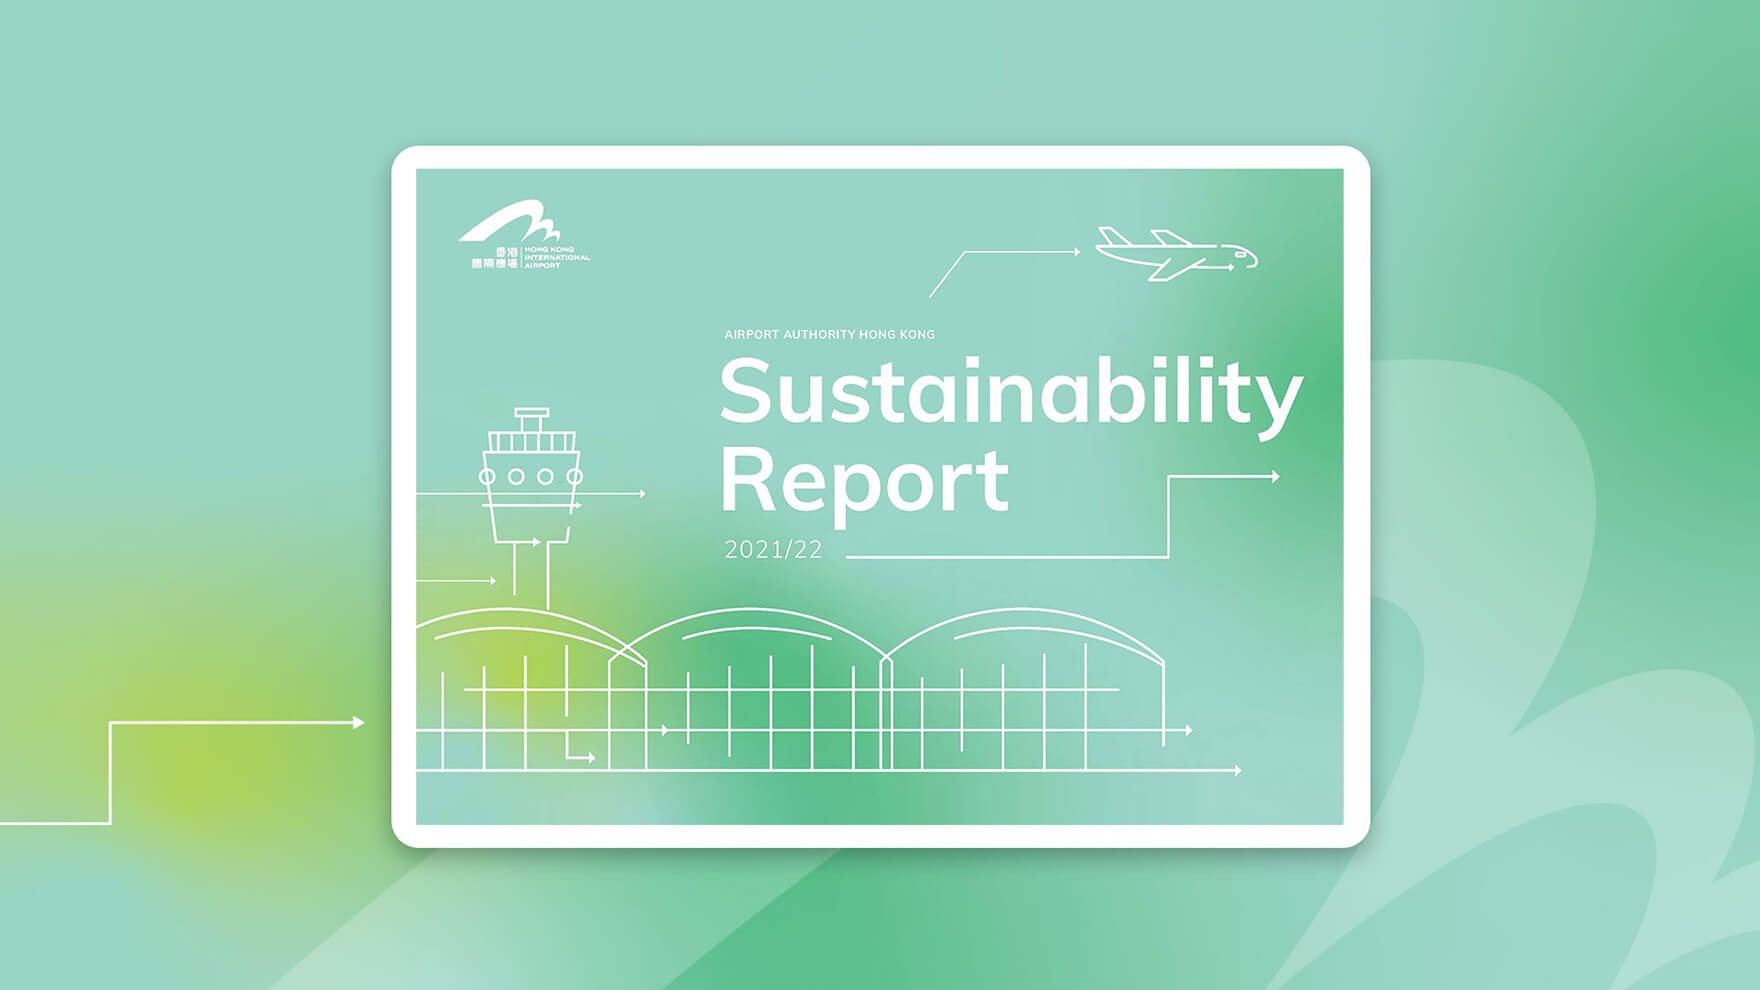 Branding Agency Hong Kong_AirportAuthorityHongKong_Sustainability Report Design_CheddarMedia_1_1760